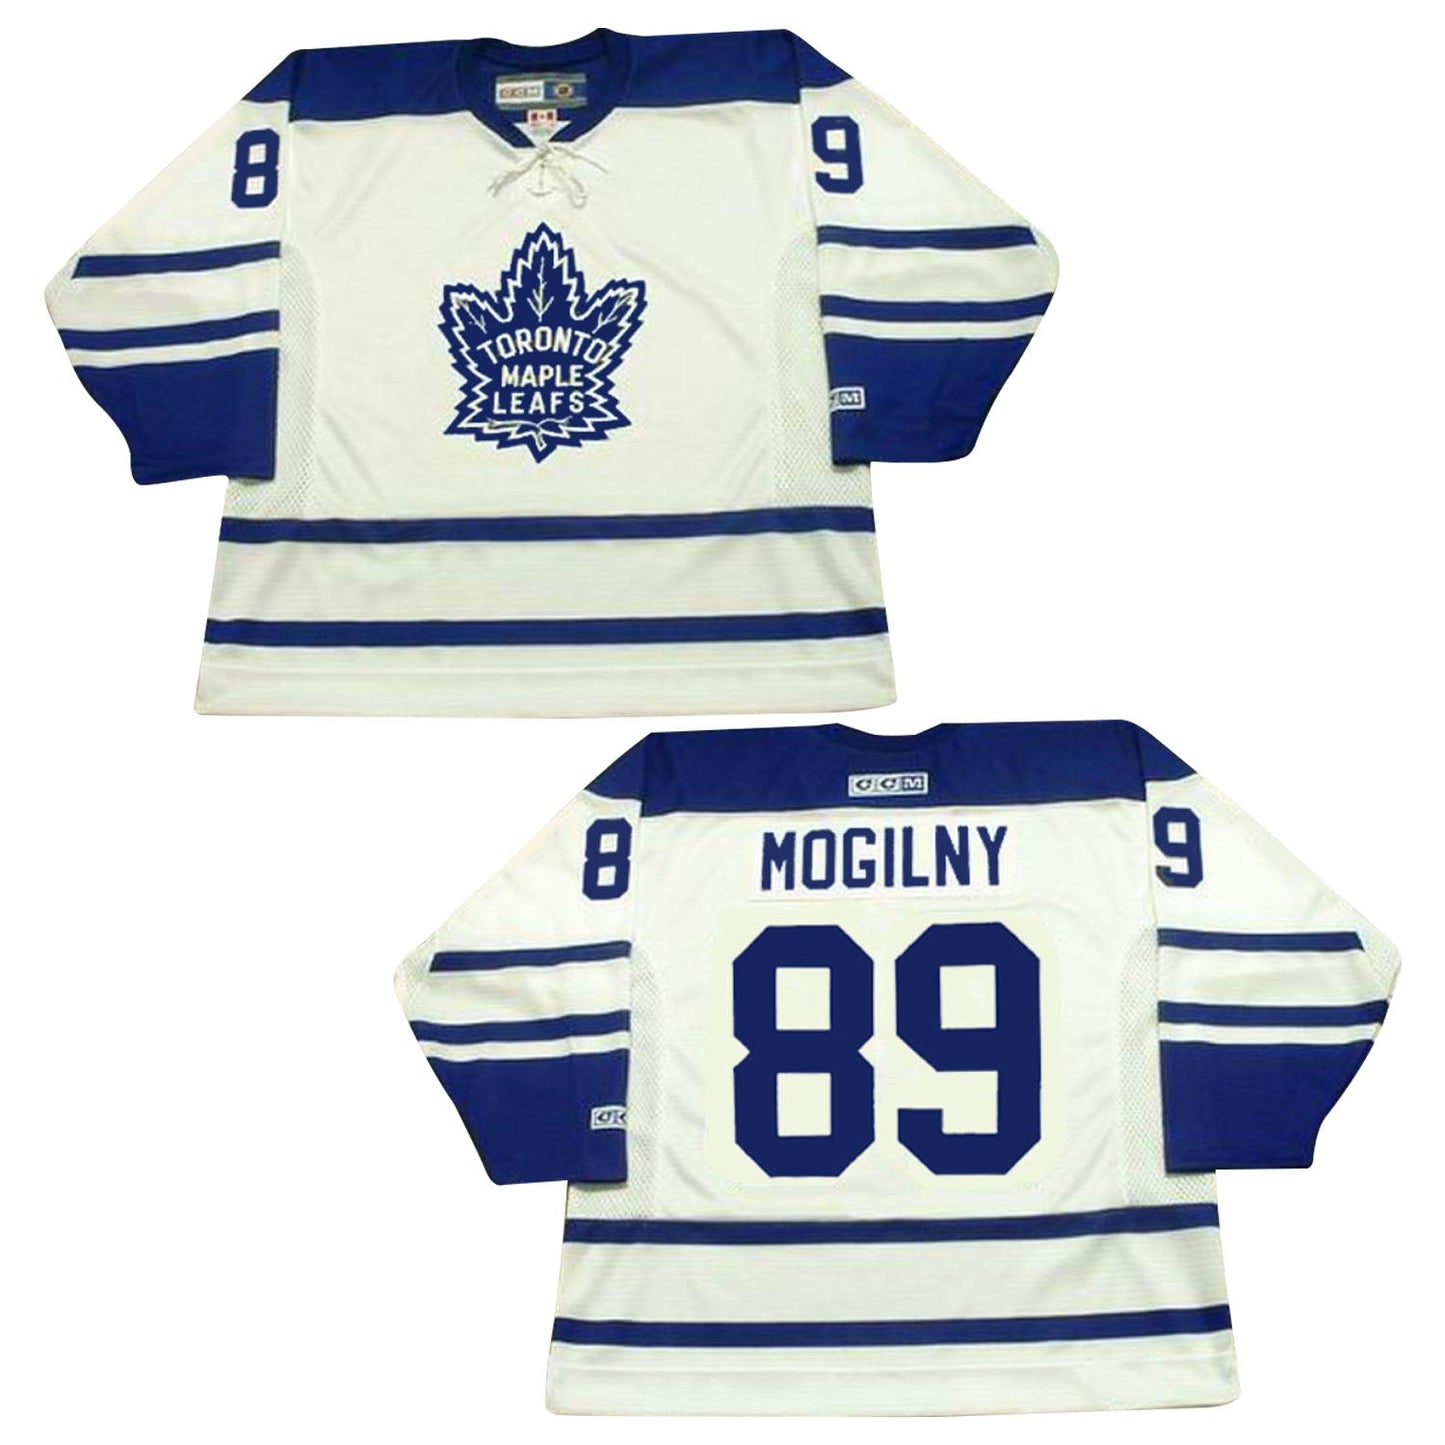 NHL Alexander Mogilny Toronto Maple Leafs 89 Jersey